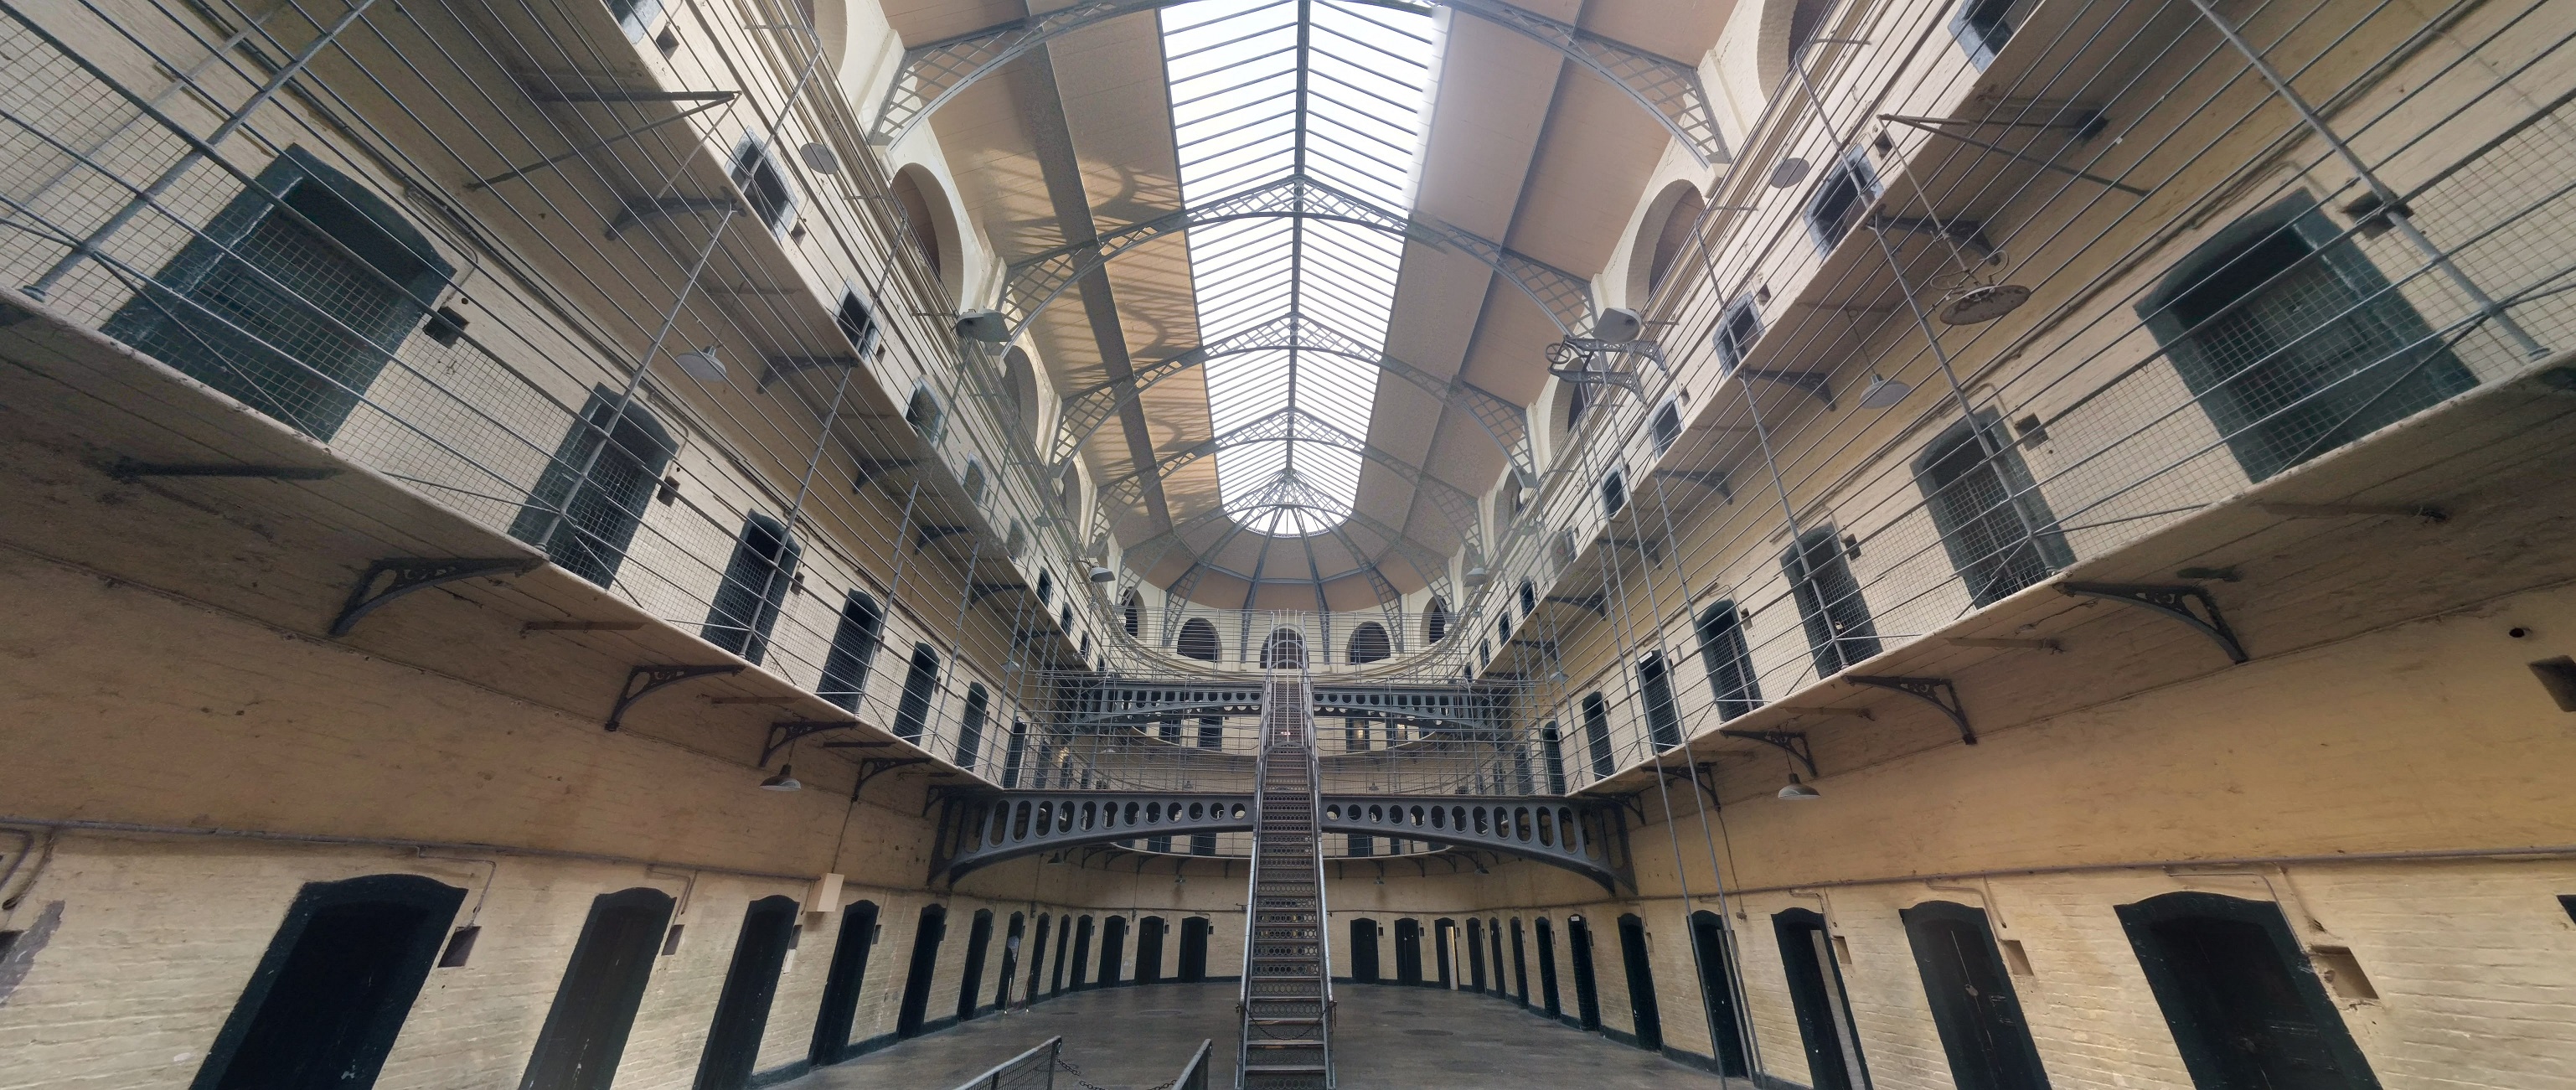 Prison Jail Dublin Ireland Stairs Abandoned 3075x1301